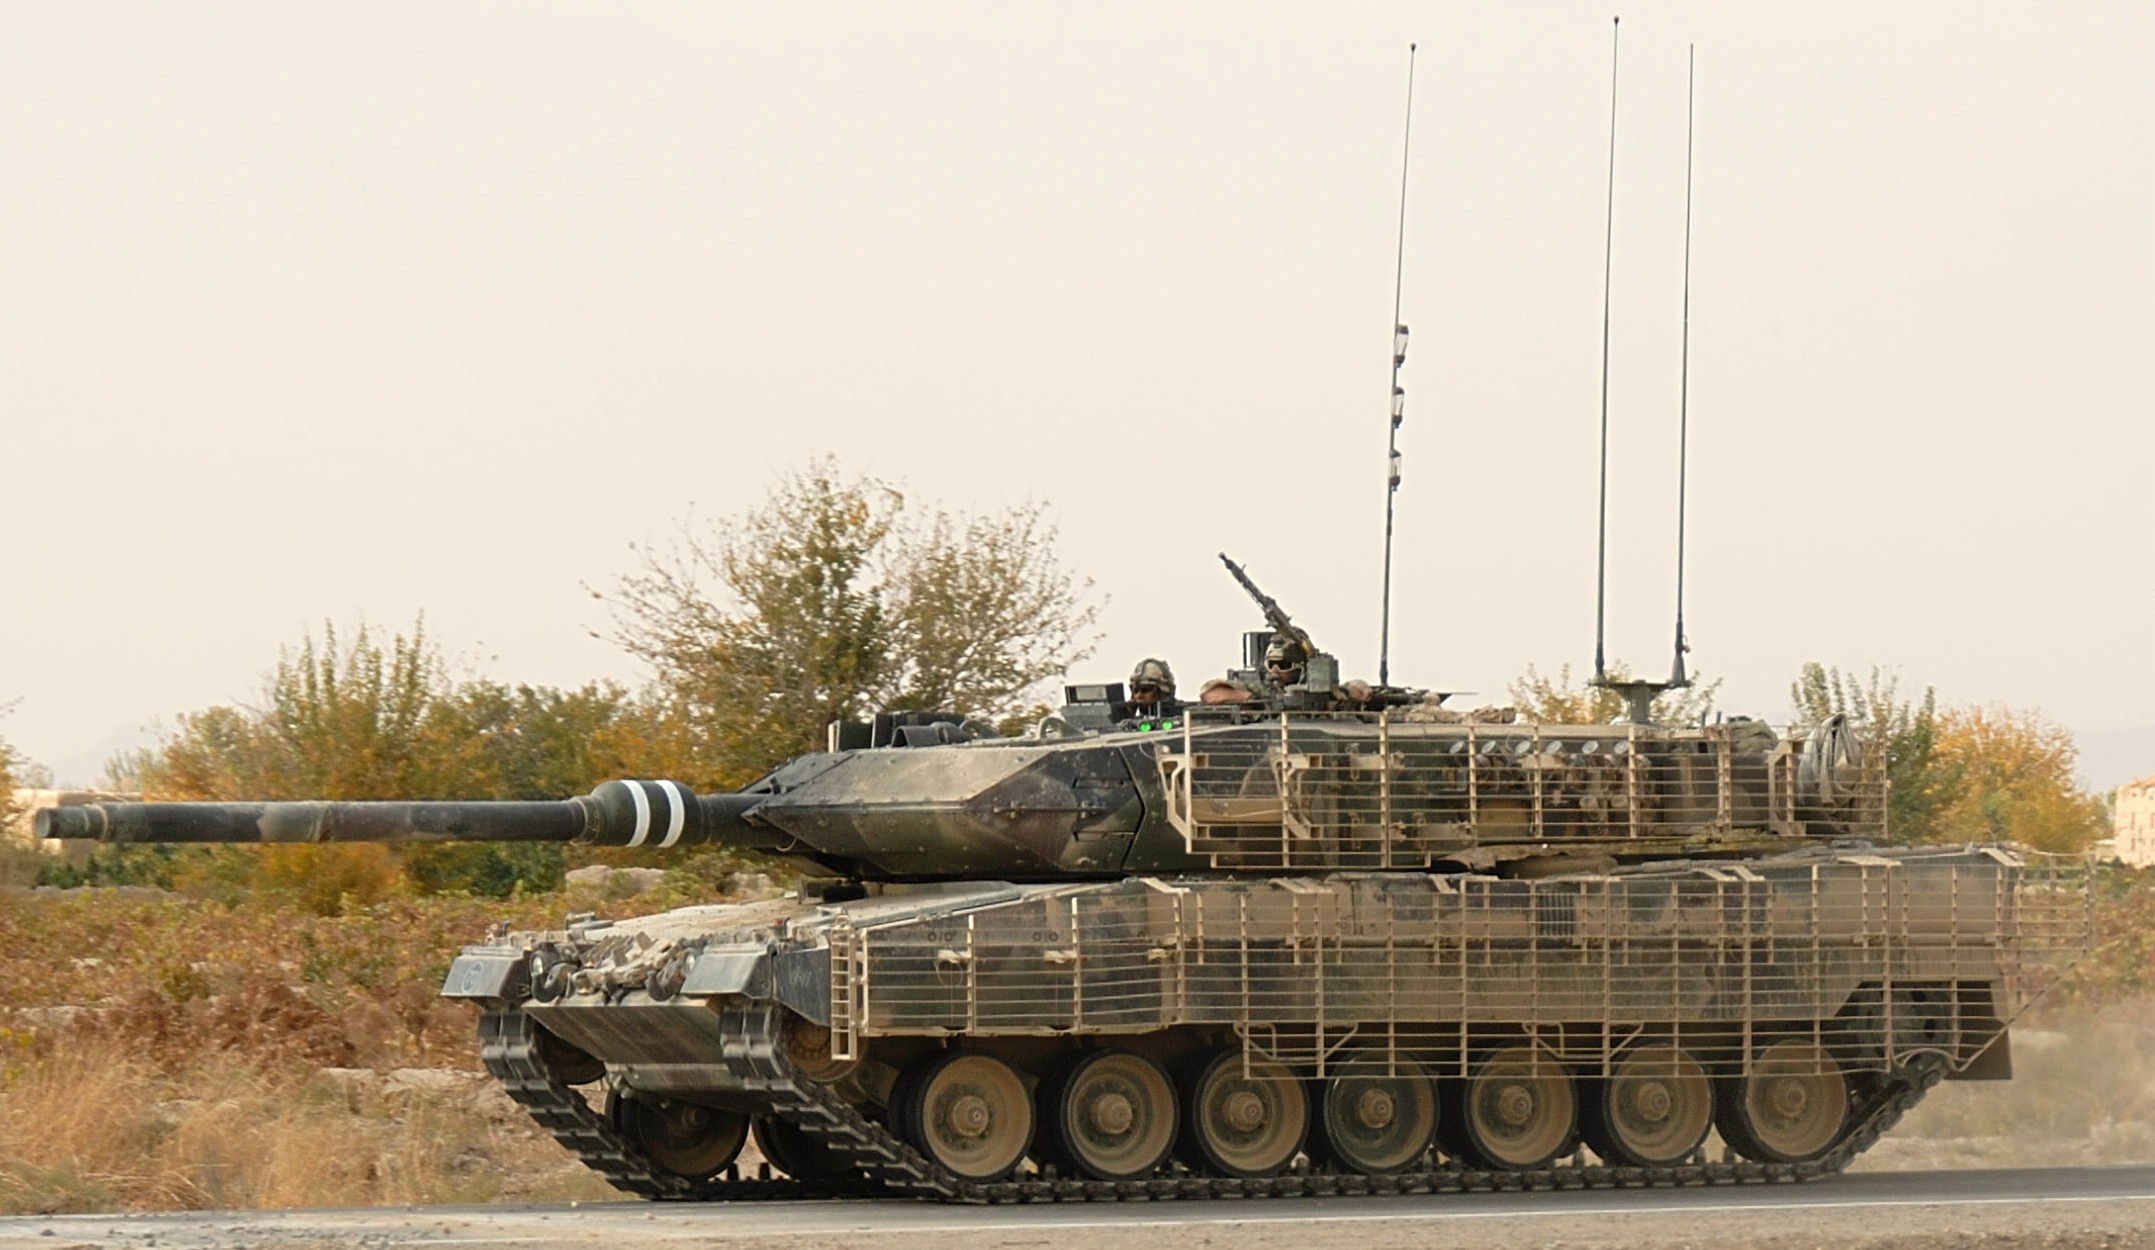 http://www.inetres.com/gp/military/cv/tank/Leopard2/Leopard2A6M_Canada_03.jpg